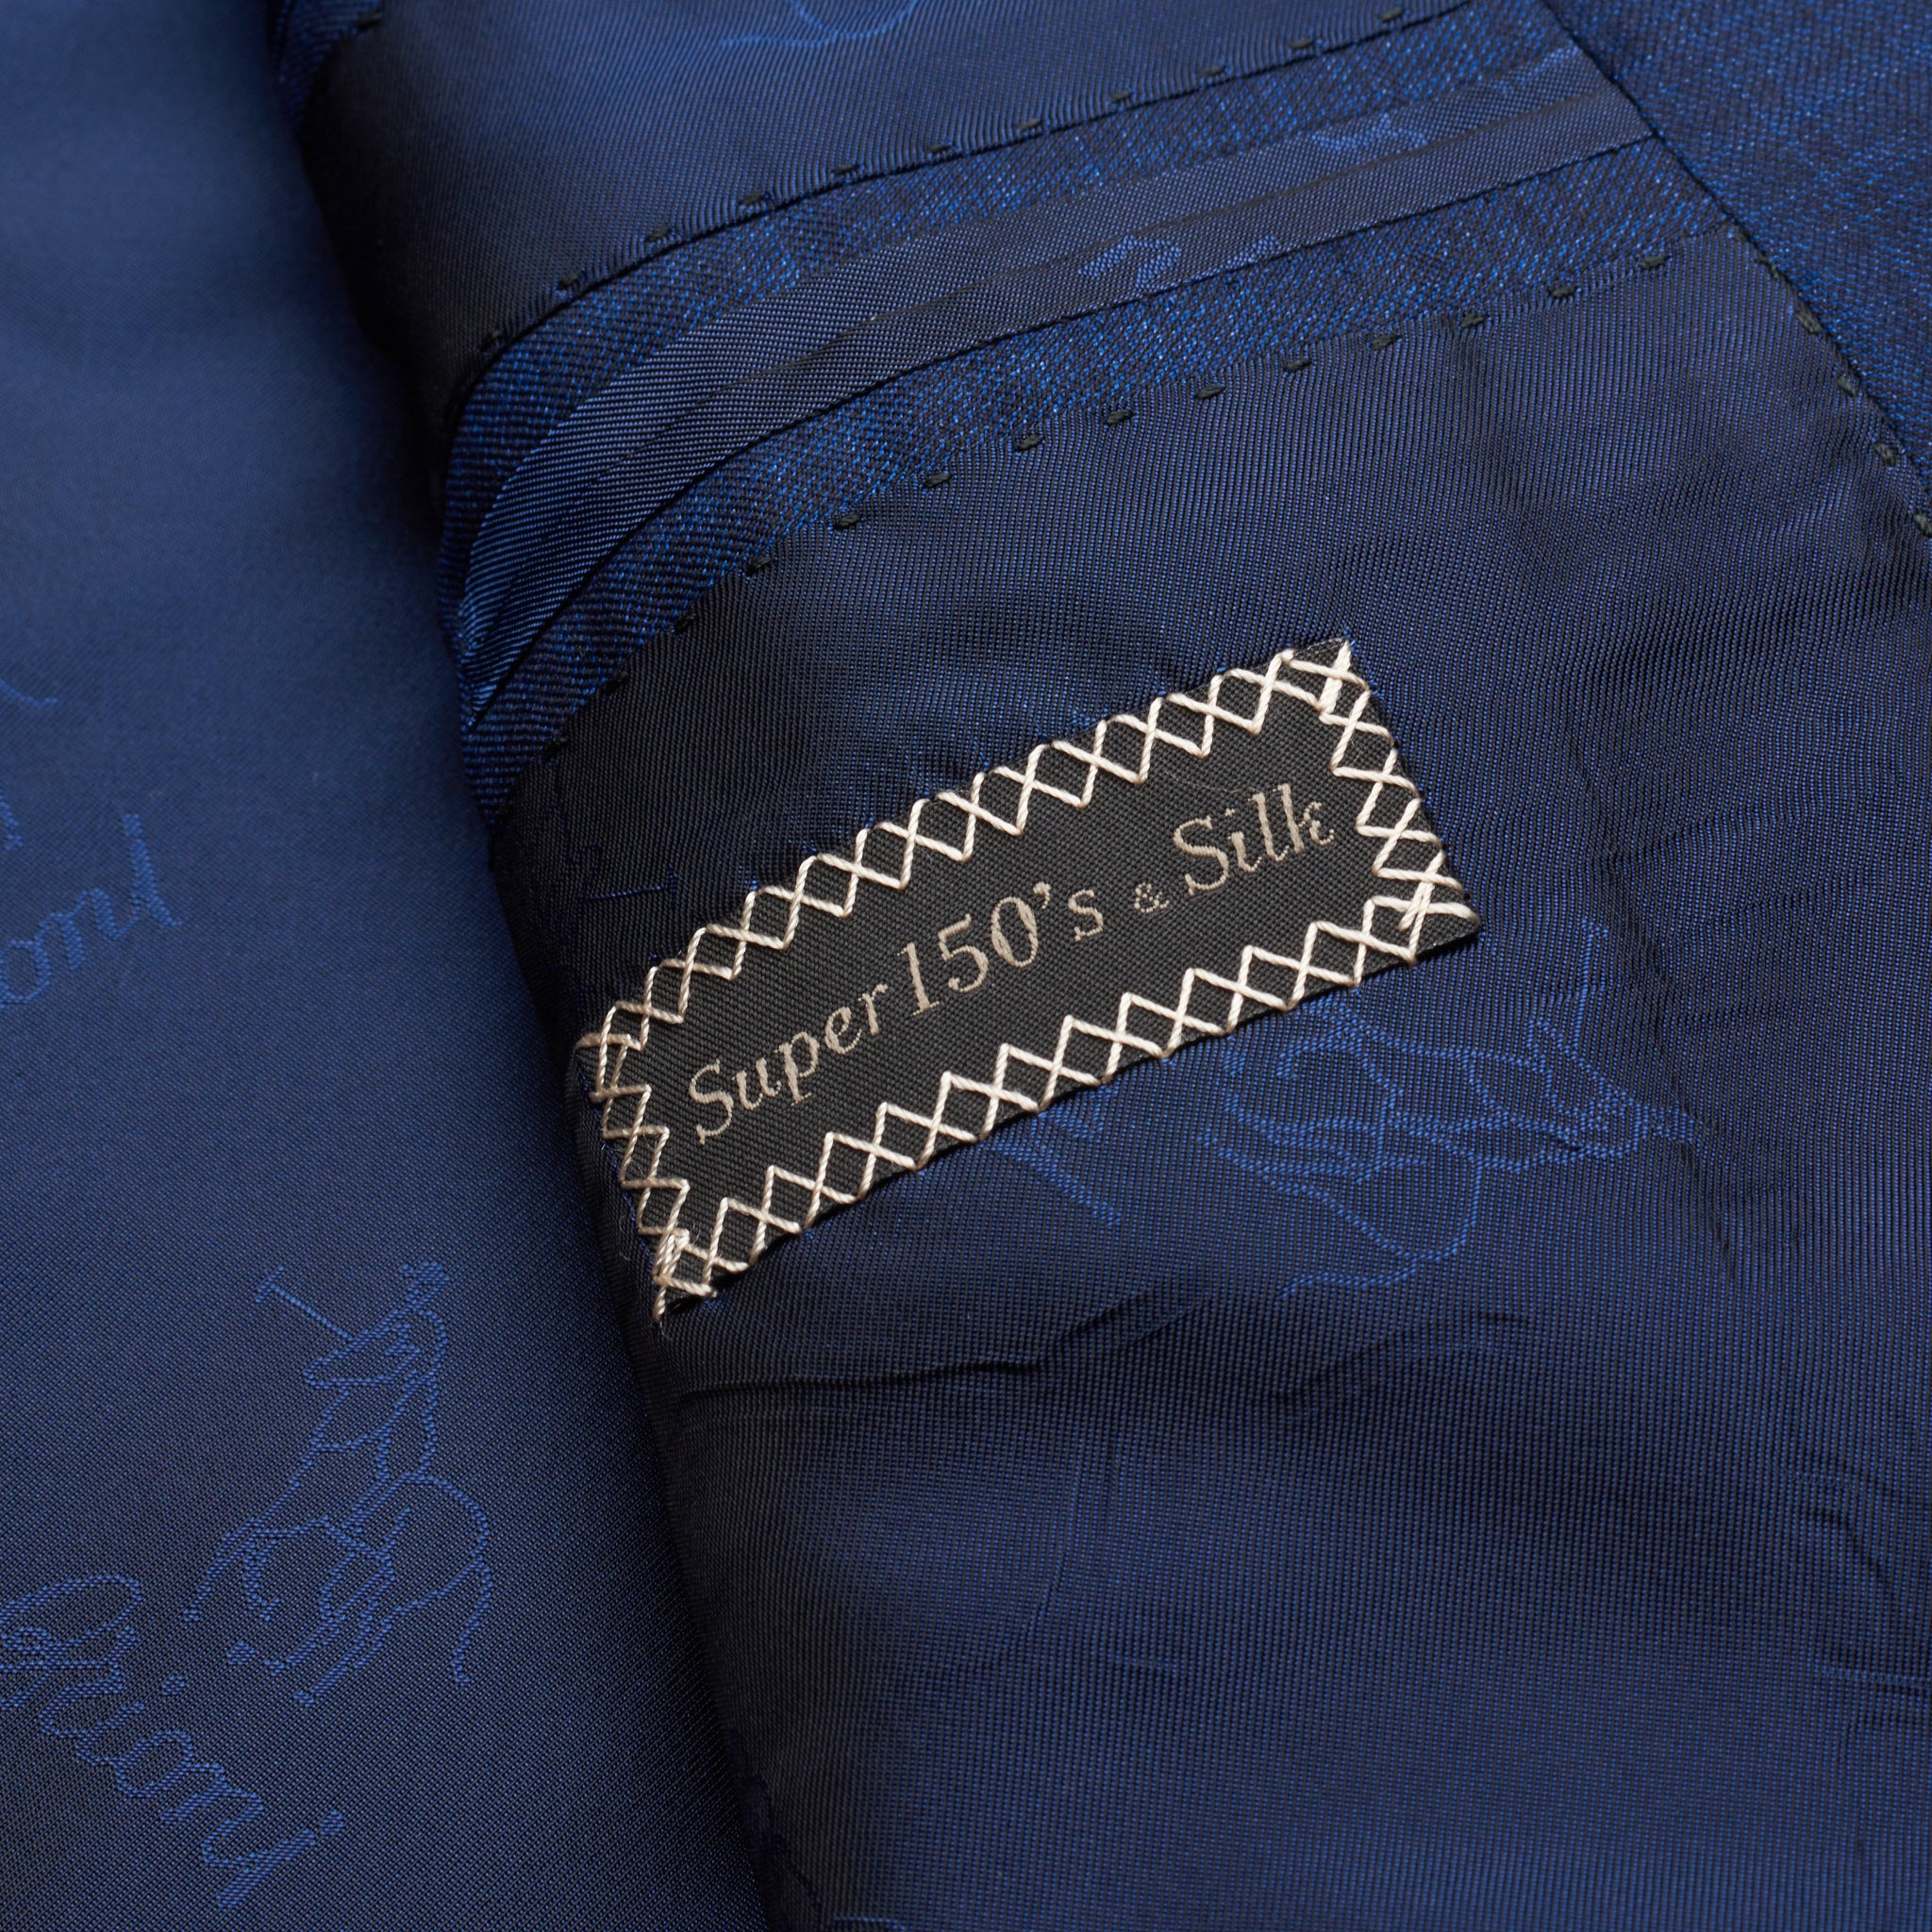 BRIONI "BRUNICO" Handmade Chambray Navy Blue Silk-Wool Super 150's Jacket NEW BRIONI